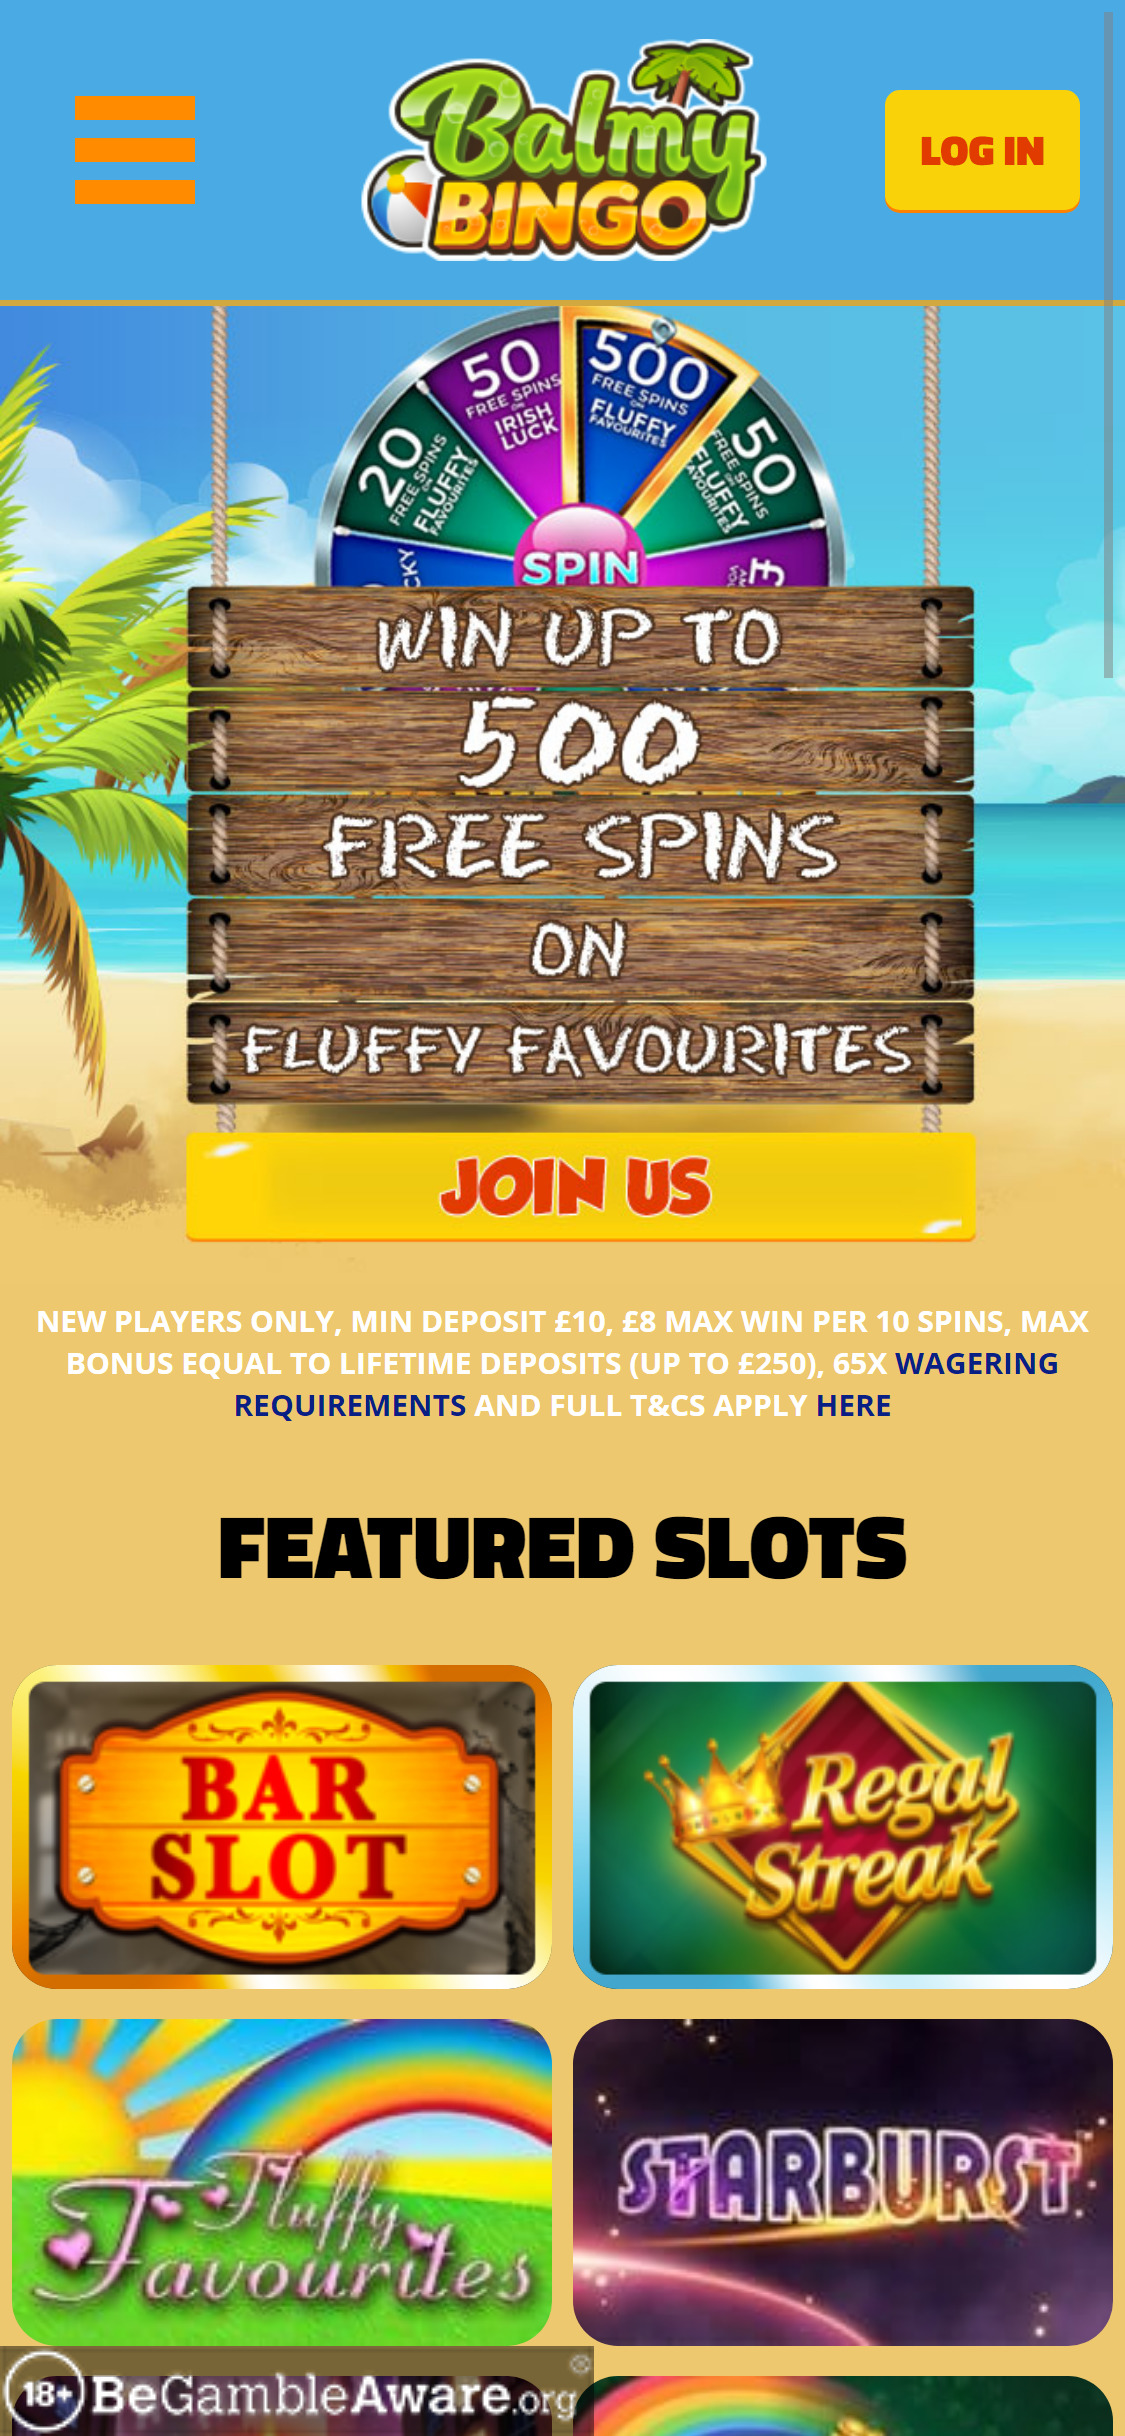 Balmy Bingo Casino Mobile Login Review